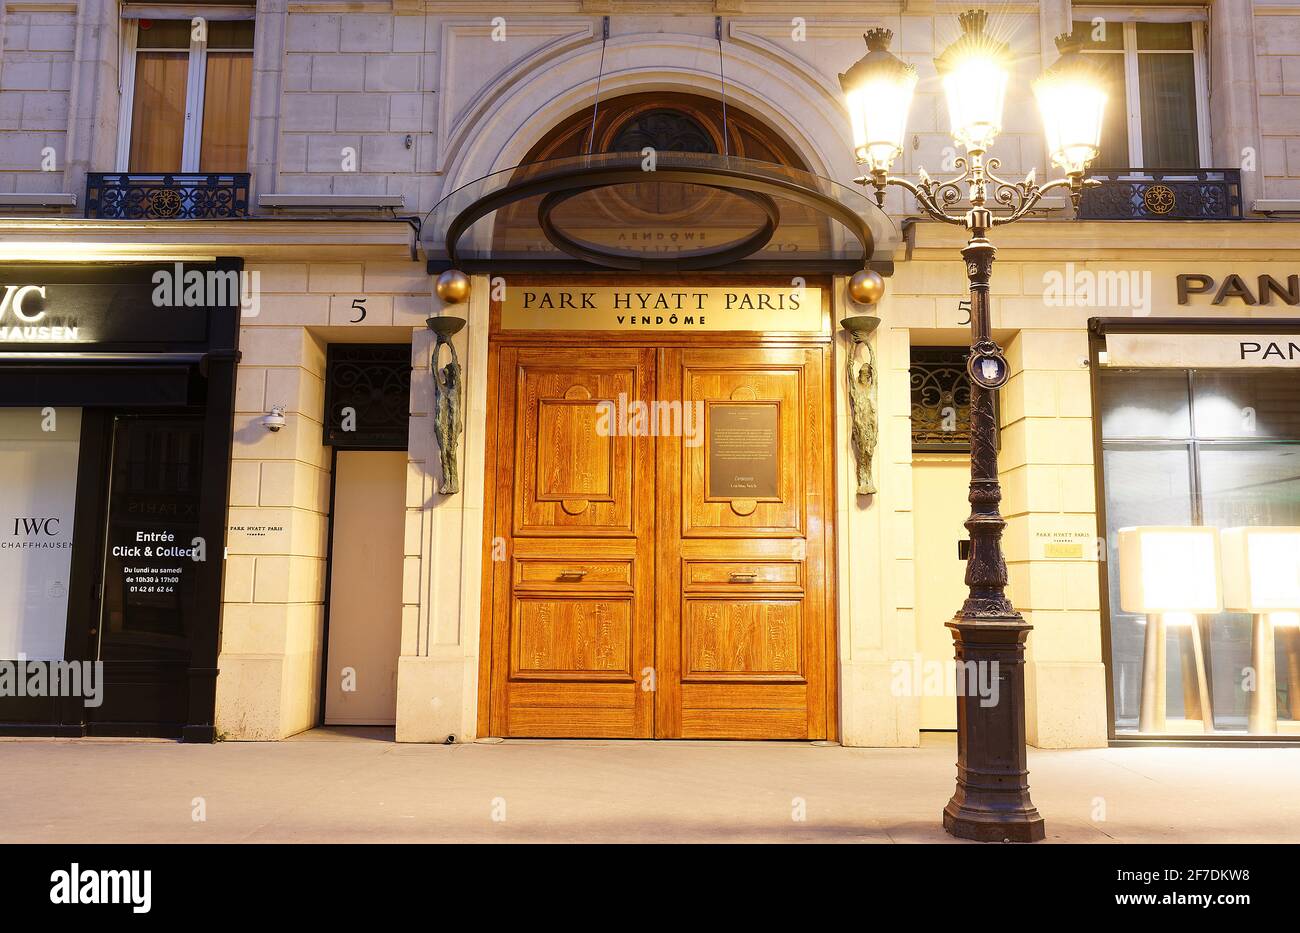 Park Hyatt Paris-Vendome is the luxury hotel palace located at rue de la Paix, near Place Vendome and the Opera Garnier palace. Stock Photo